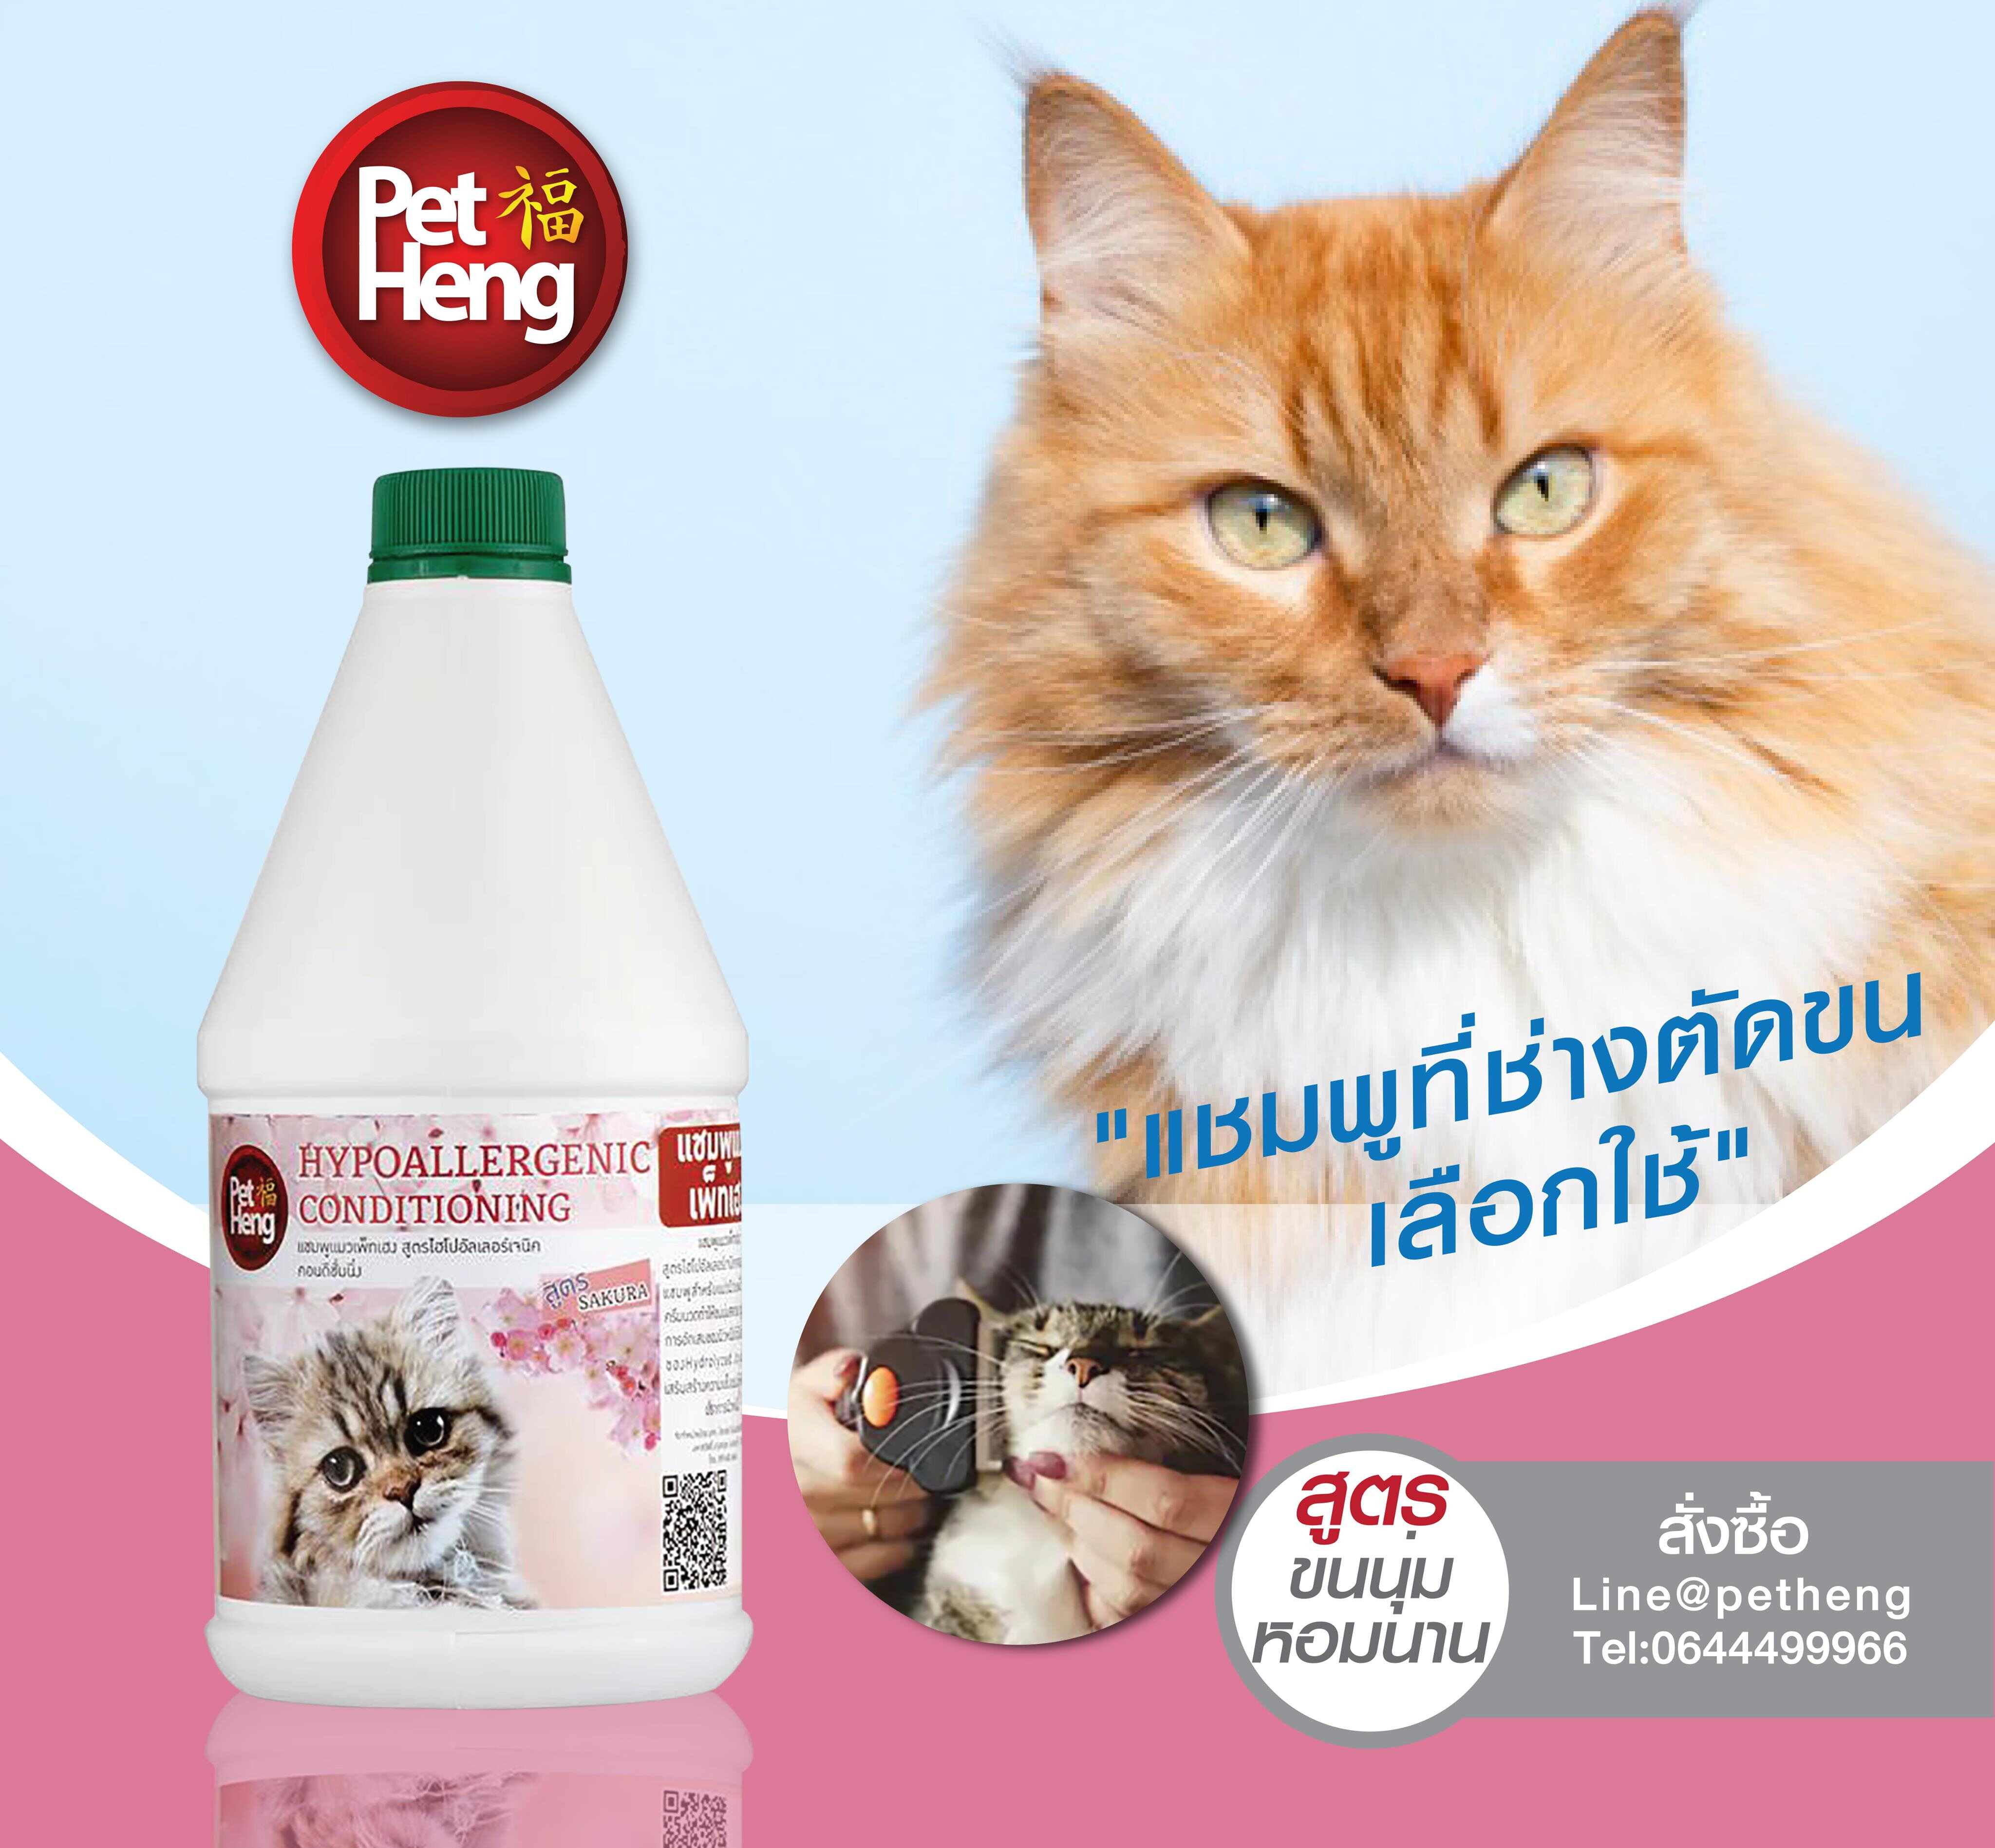 Petheng Cat Shampoo Shed Control เพ็ทเฮงแชมพูแมวป้องกันเห็บ หมัด ไร ลดการหลุดร่วงของขน 1000 ml. กลิ่นพฤกษา